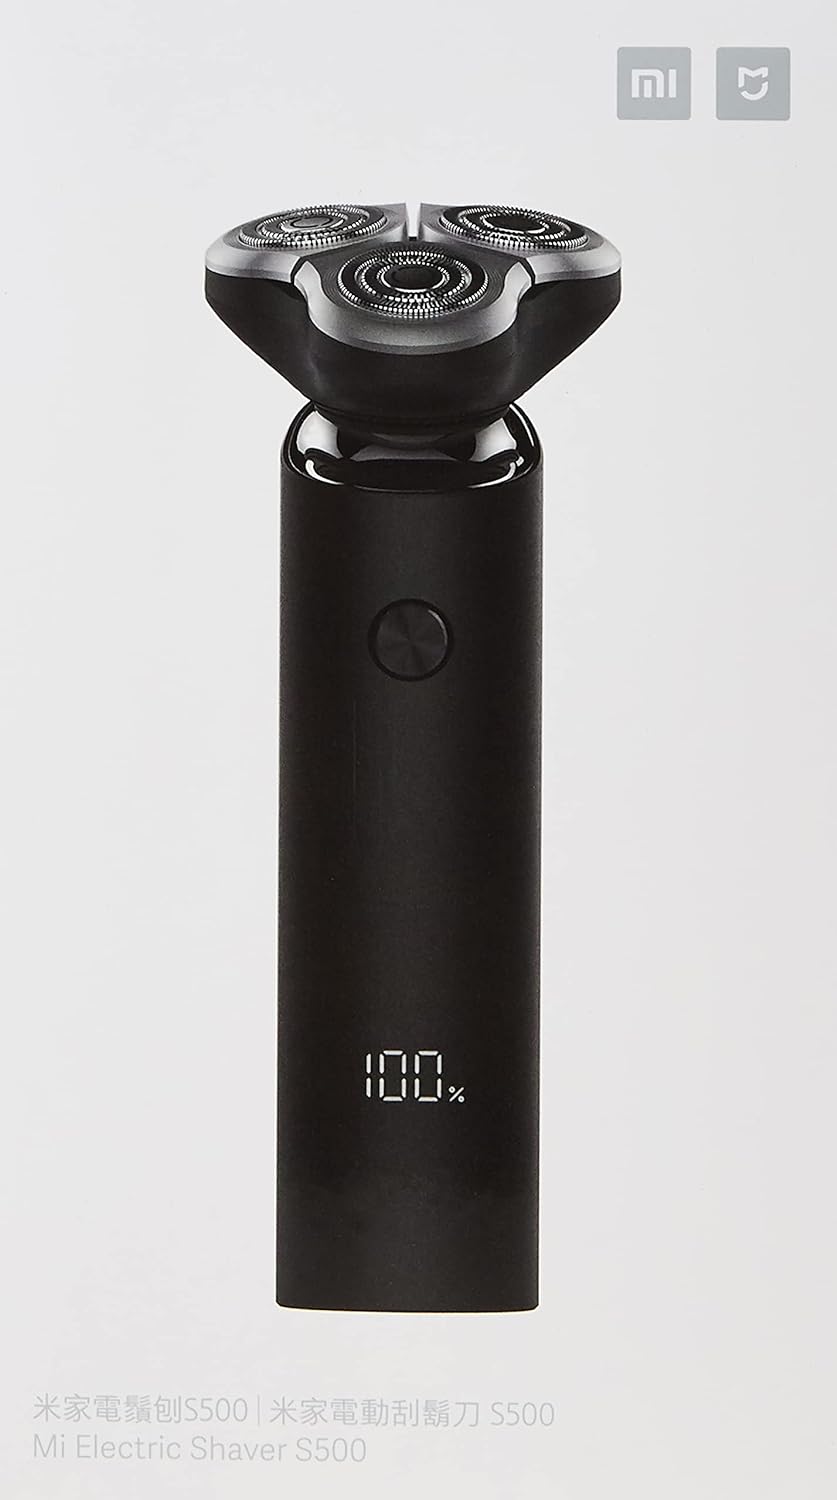 Xioami Mi Electric Shaver S500, Black